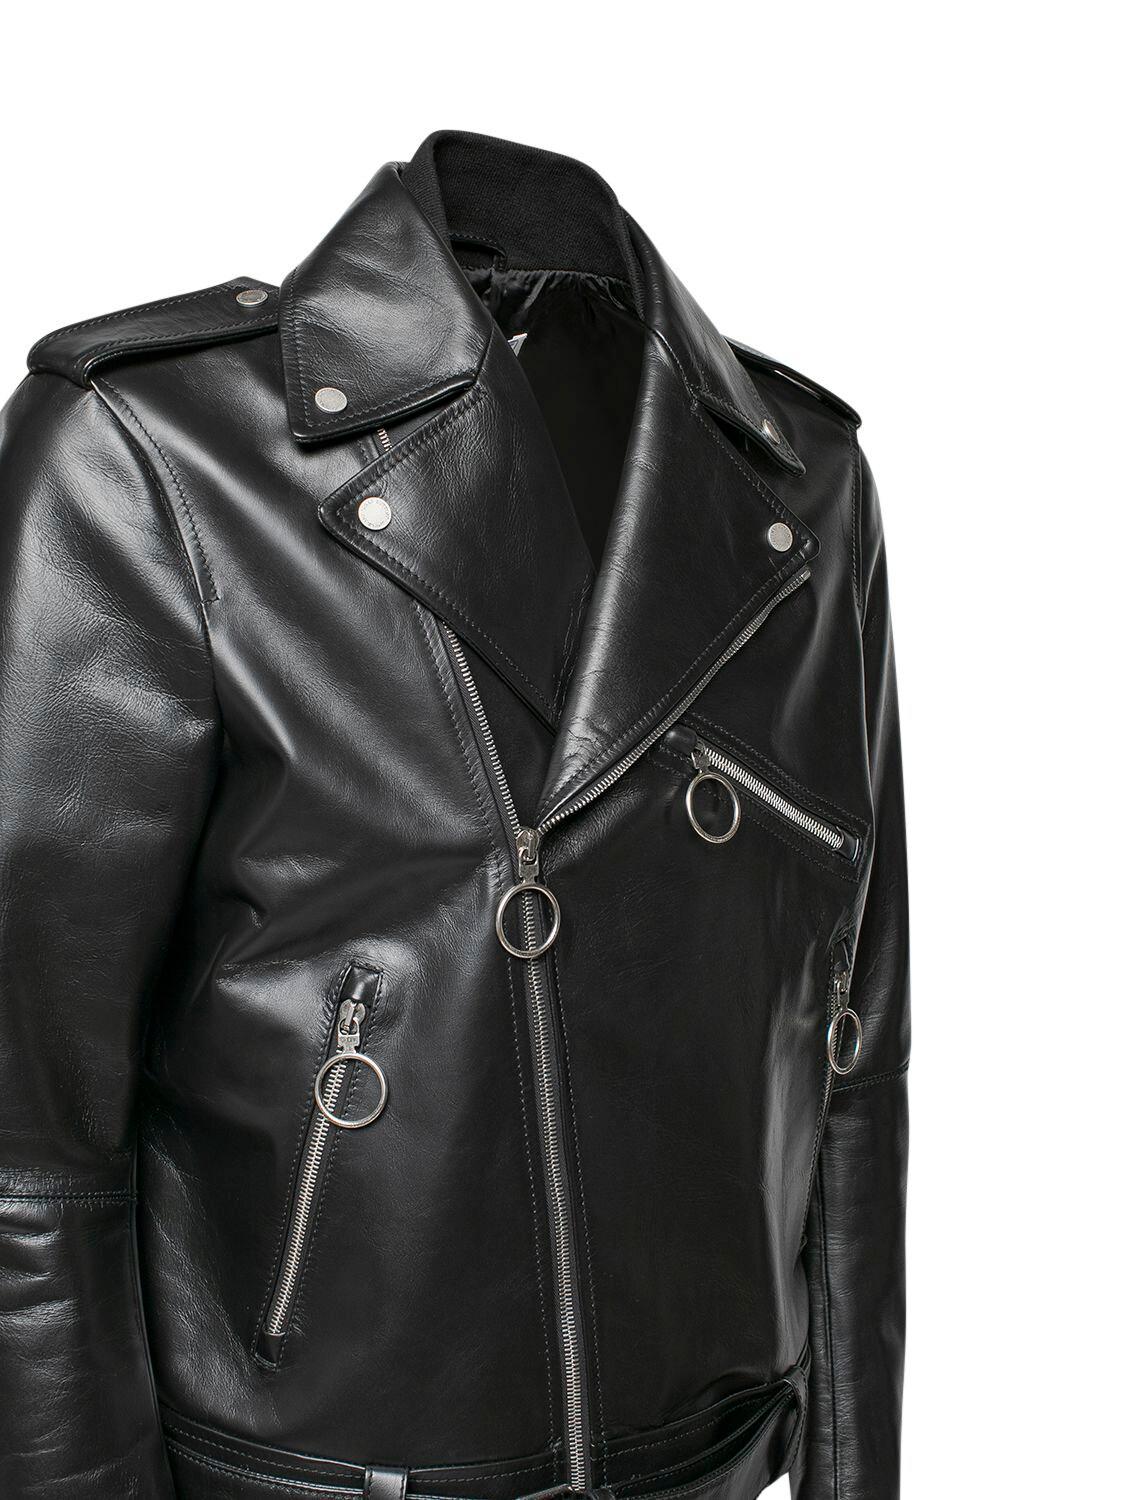 Off-White c/o Virgil Abloh Acrylic Arrow Leather Biker Jacket in Black 